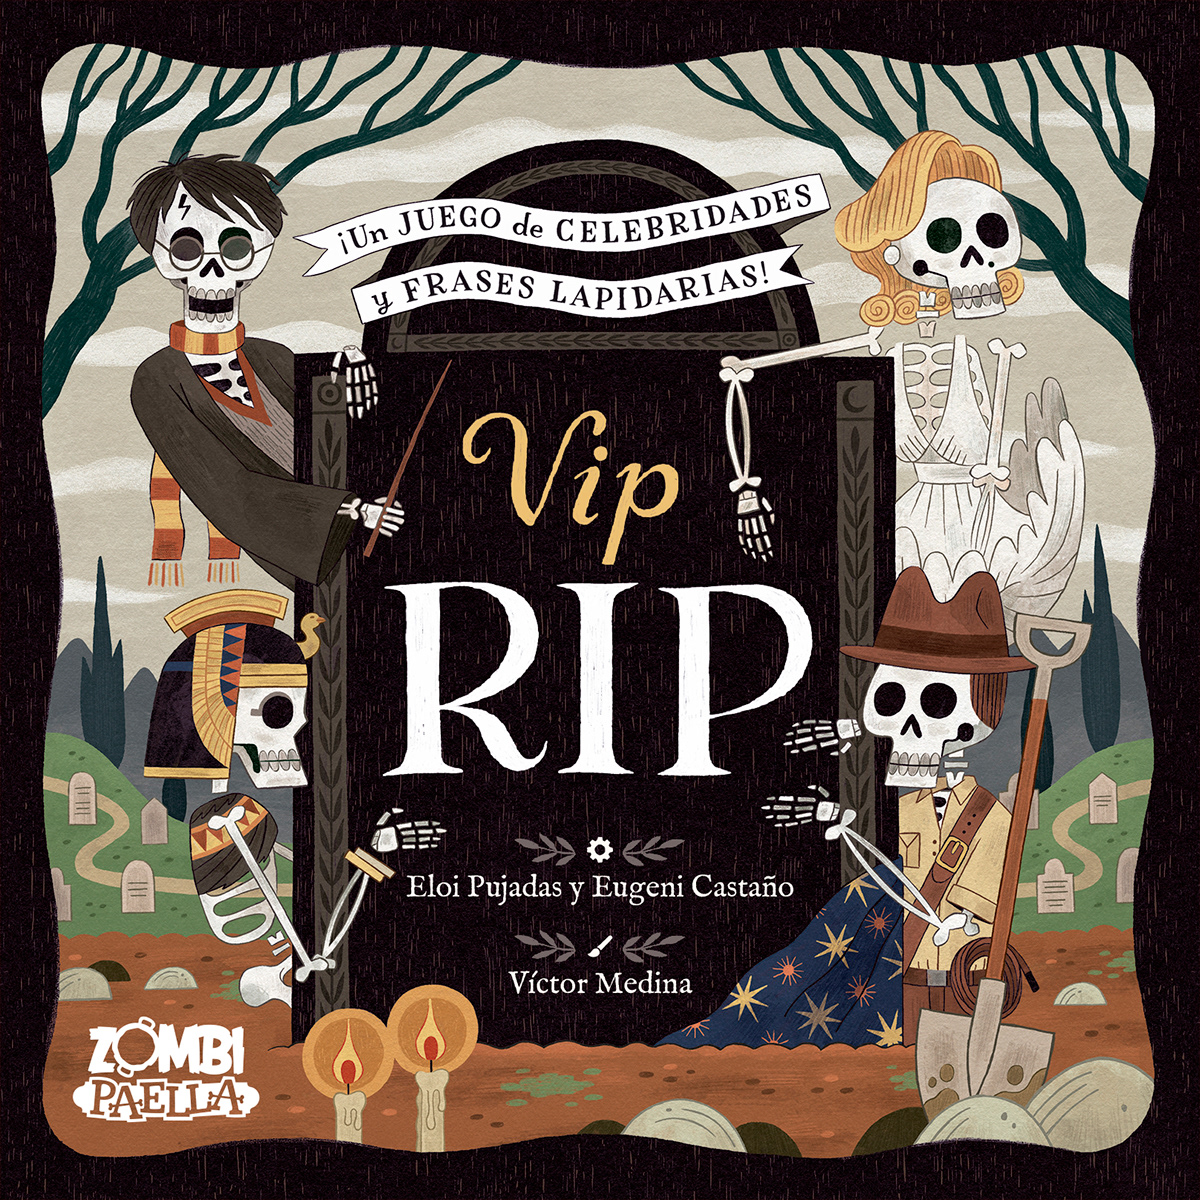 ILLUSTRATION  board game party creepy dark horror skeletons Halloween cemetery graveyard